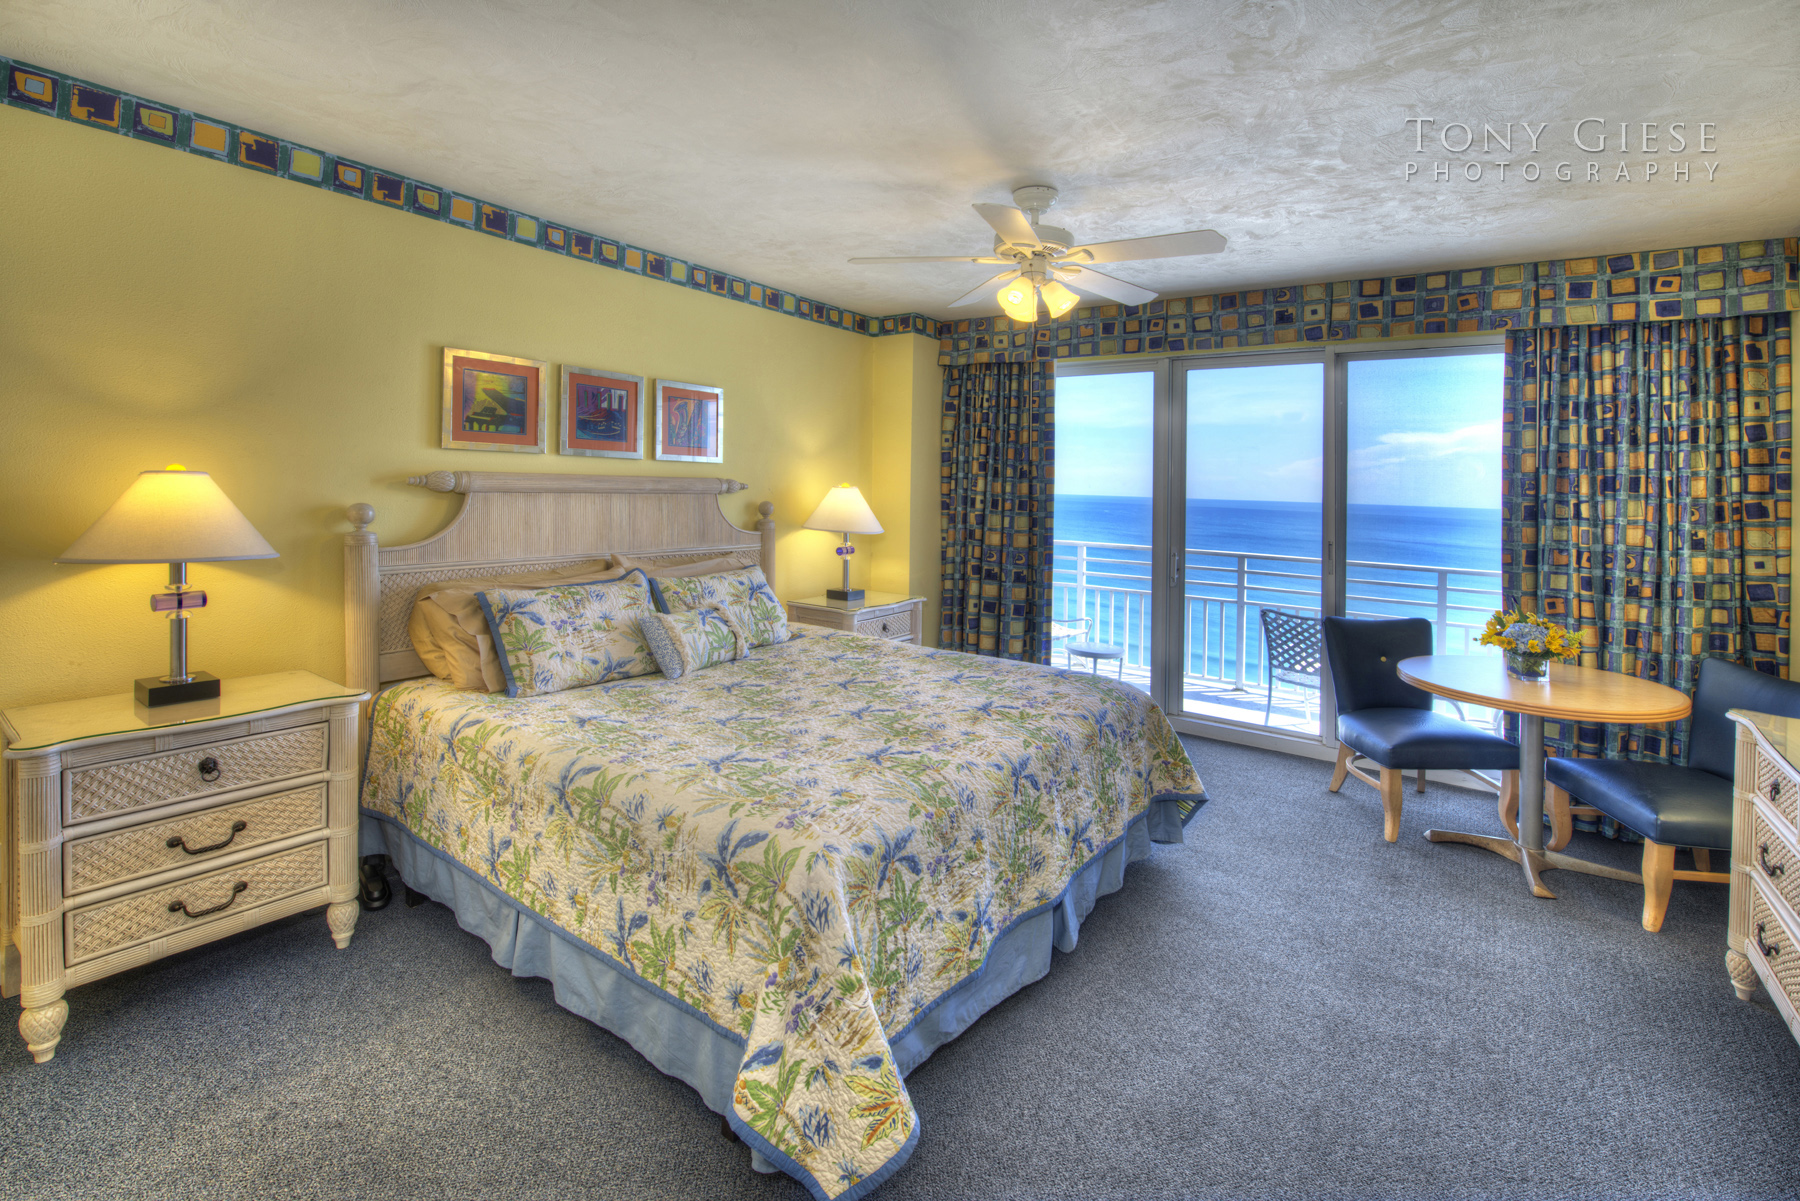 Condo Master bedroom with a ocean view, Ocean Walk Resort, Daytona Beach, Florida. Photo by Tony Giese Photography